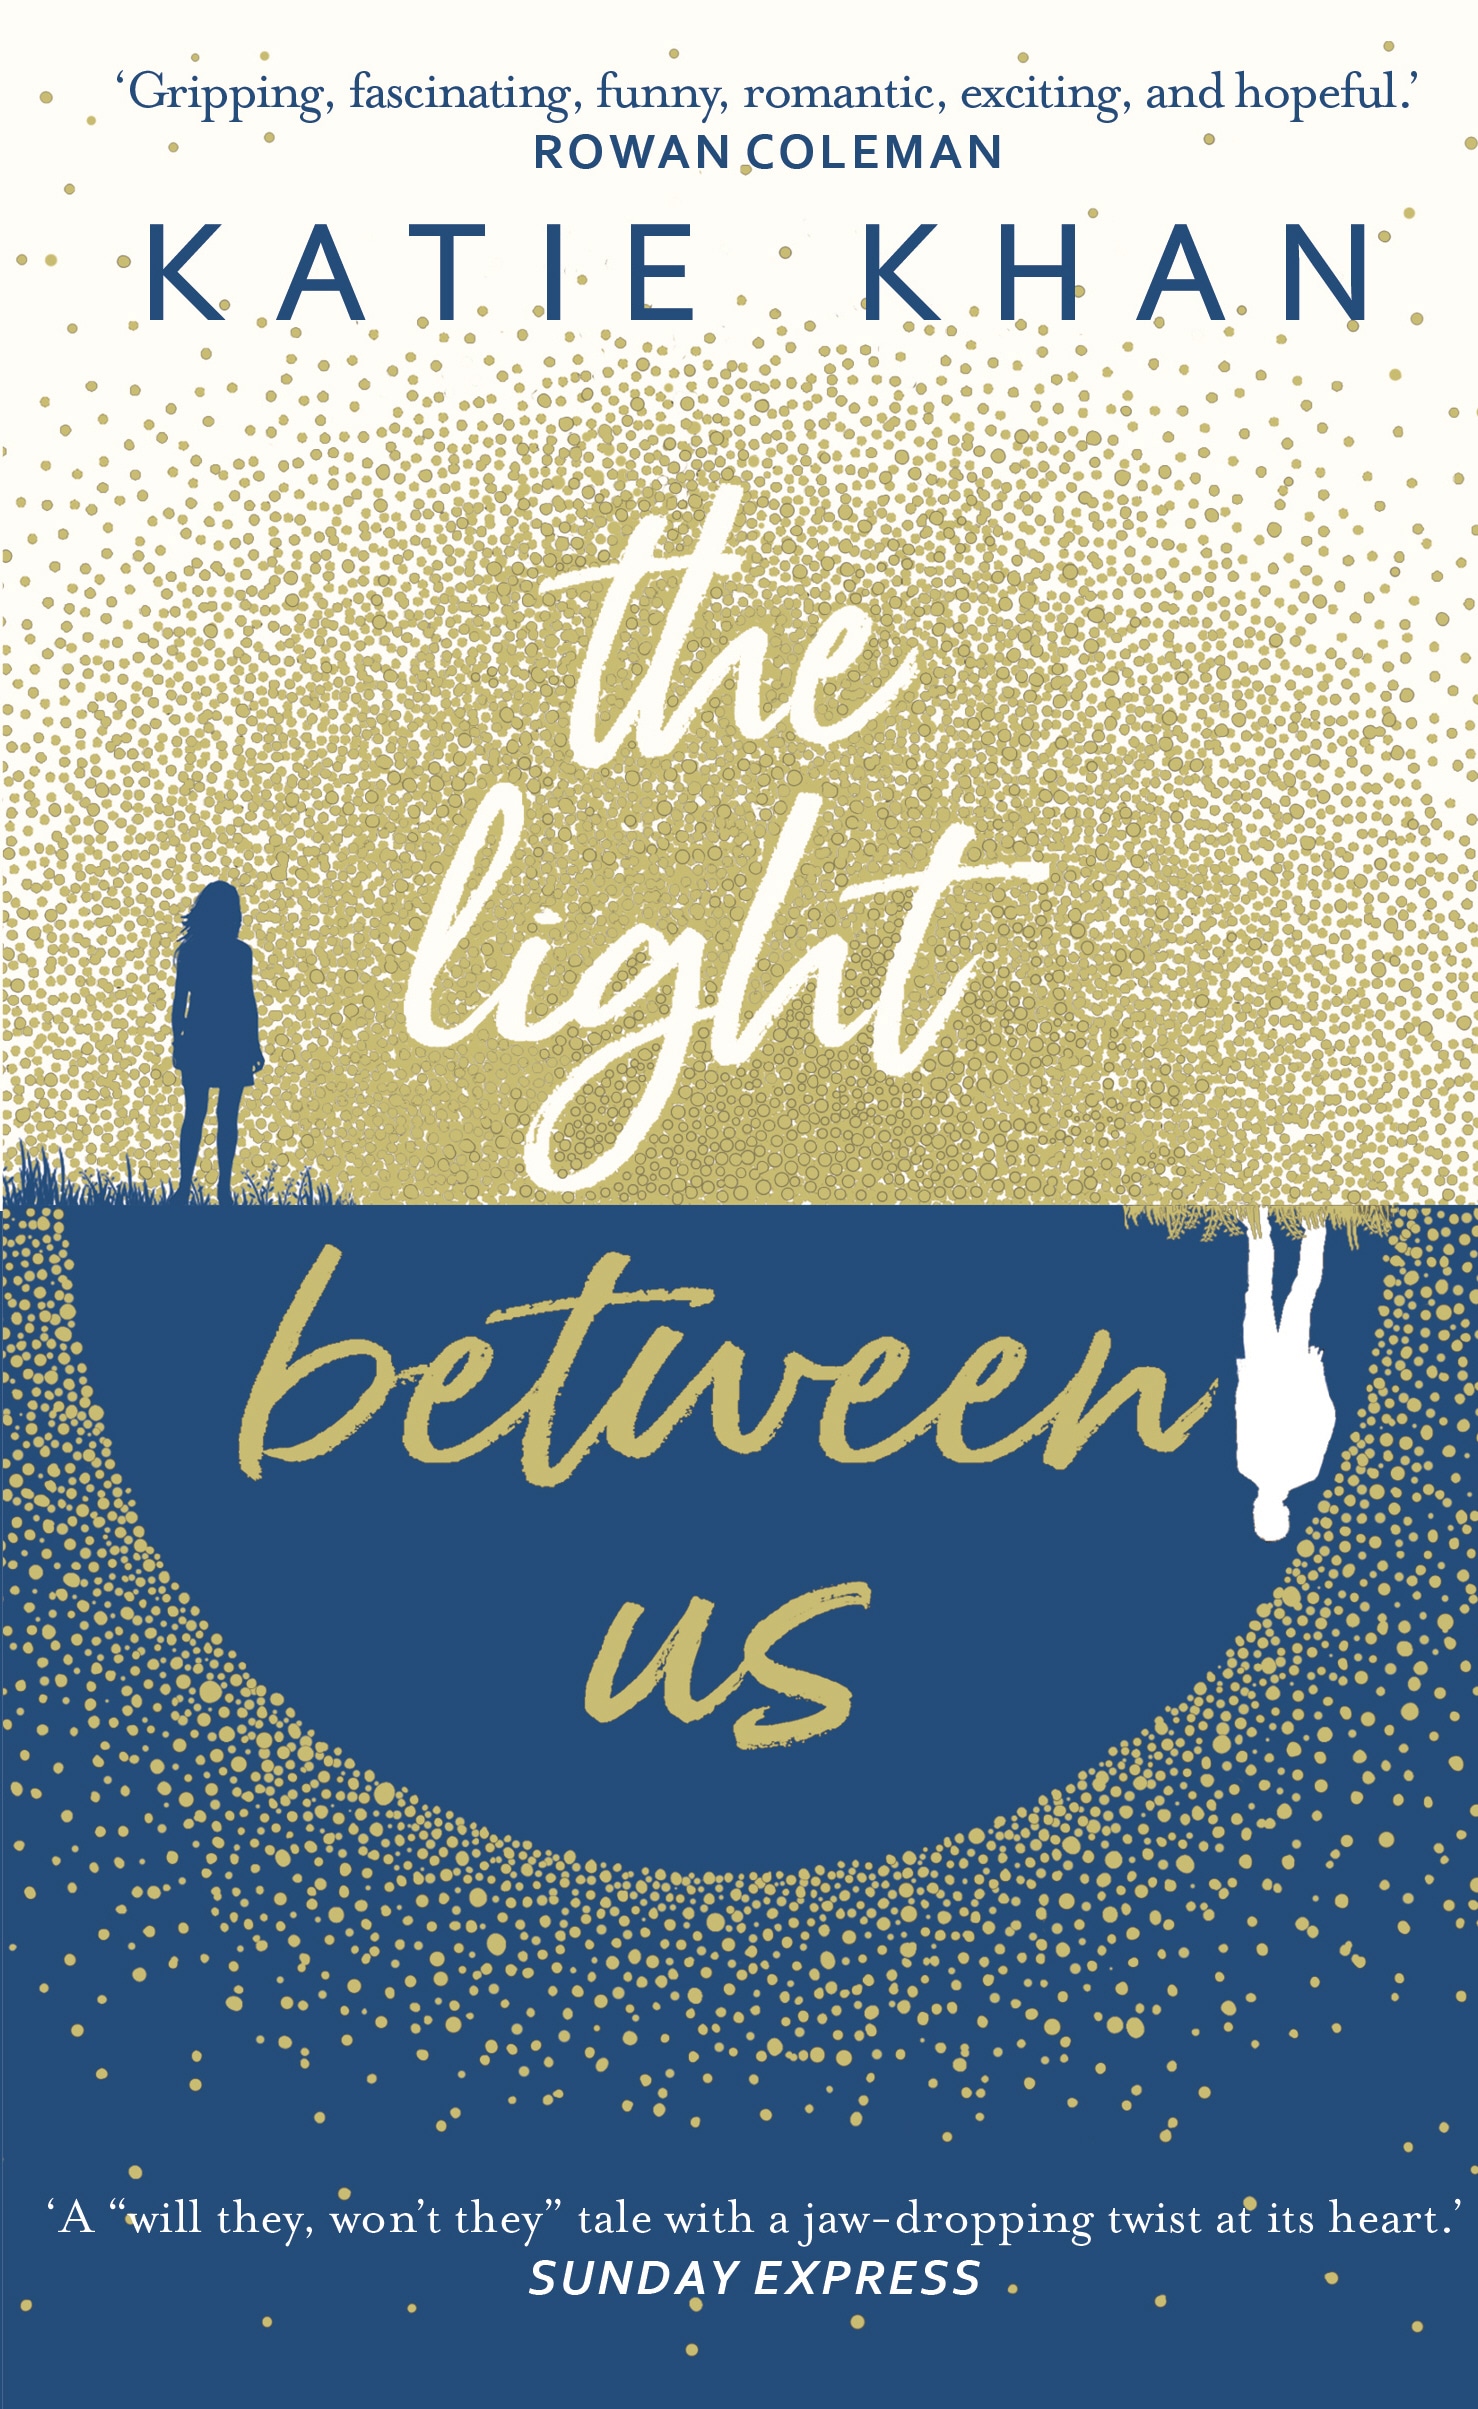 Book “The Light Between Us” by Katie Khan — November 29, 2018